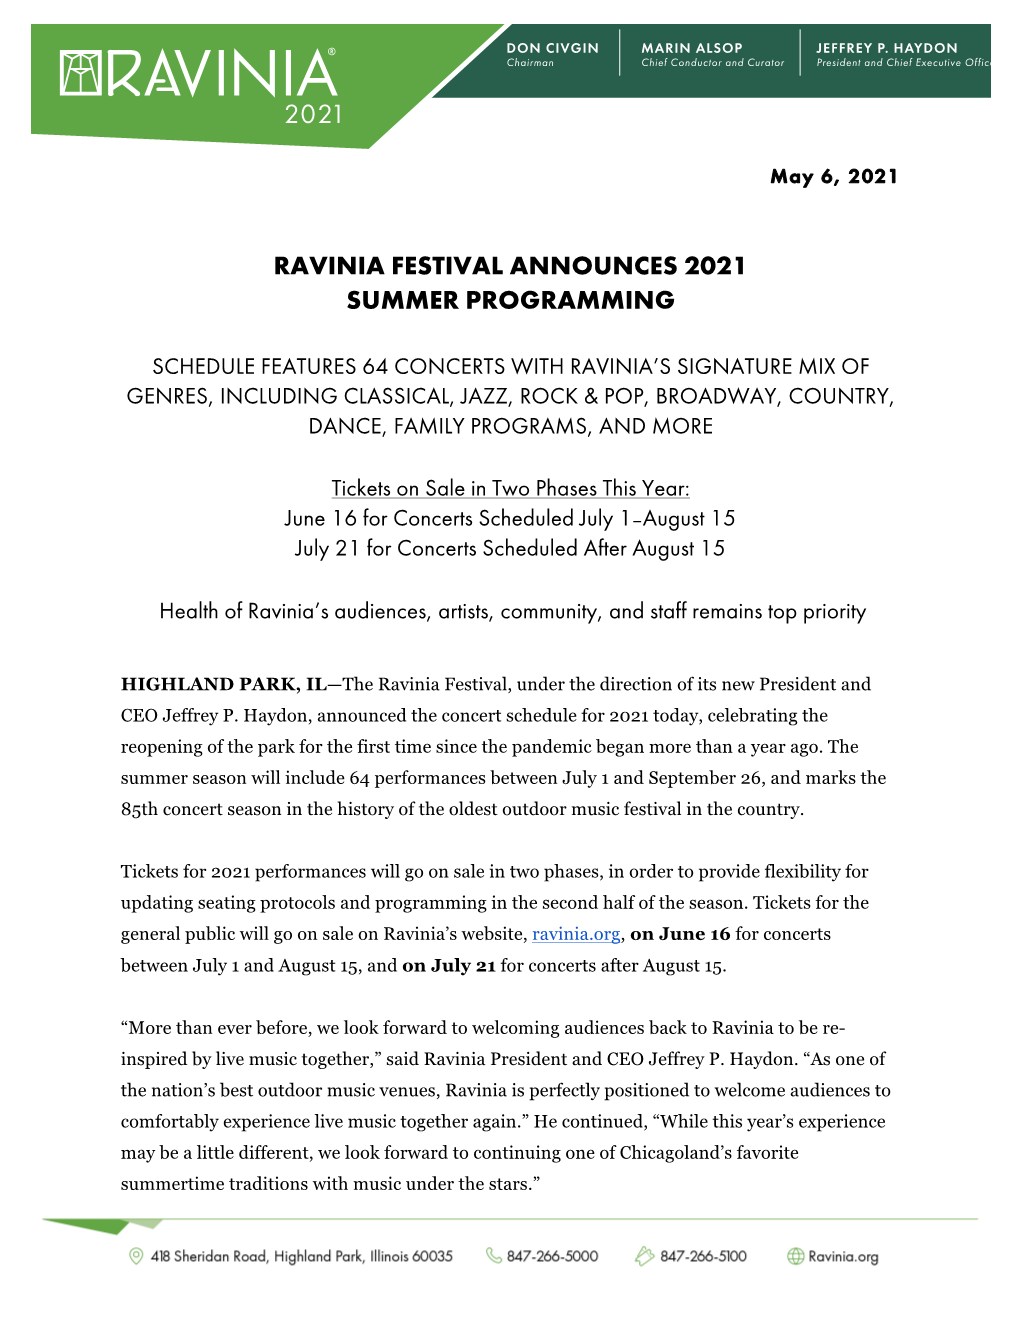 Ravinia Festival Announces 2021 Season